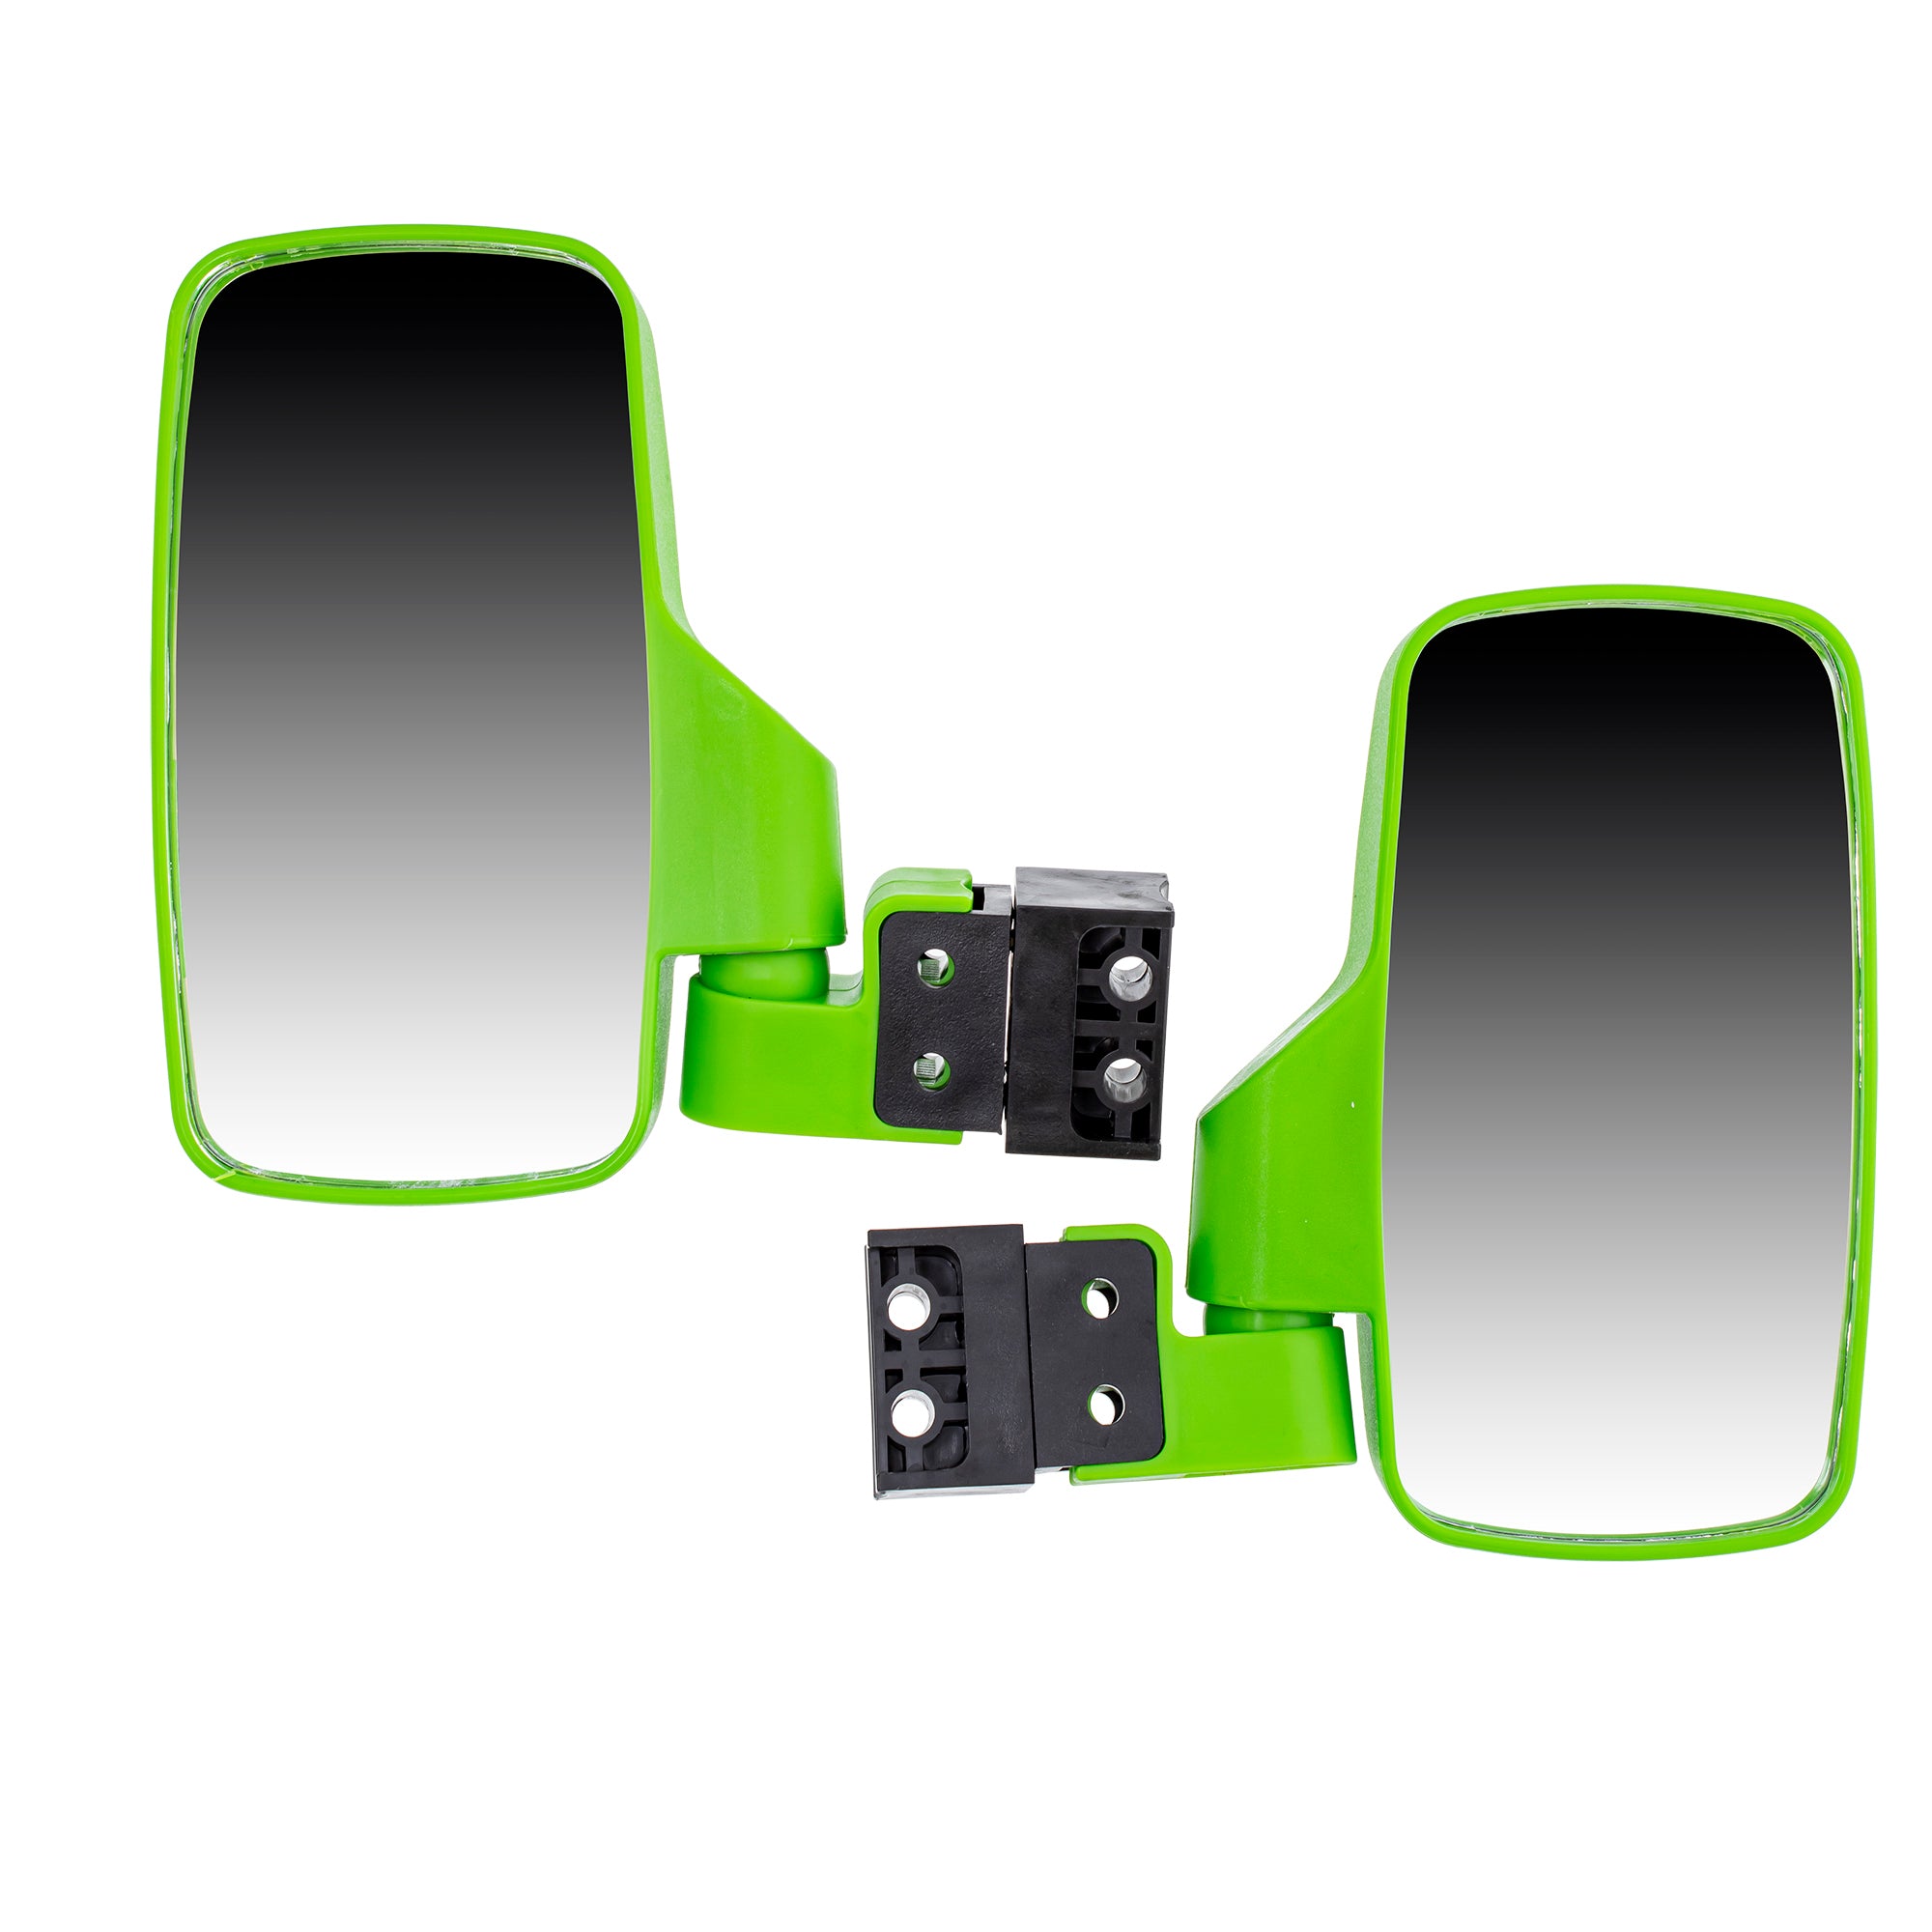 Green Break Away Side & Rear View Mirror For Polaris Can-Am Arctic Cat MK1001408